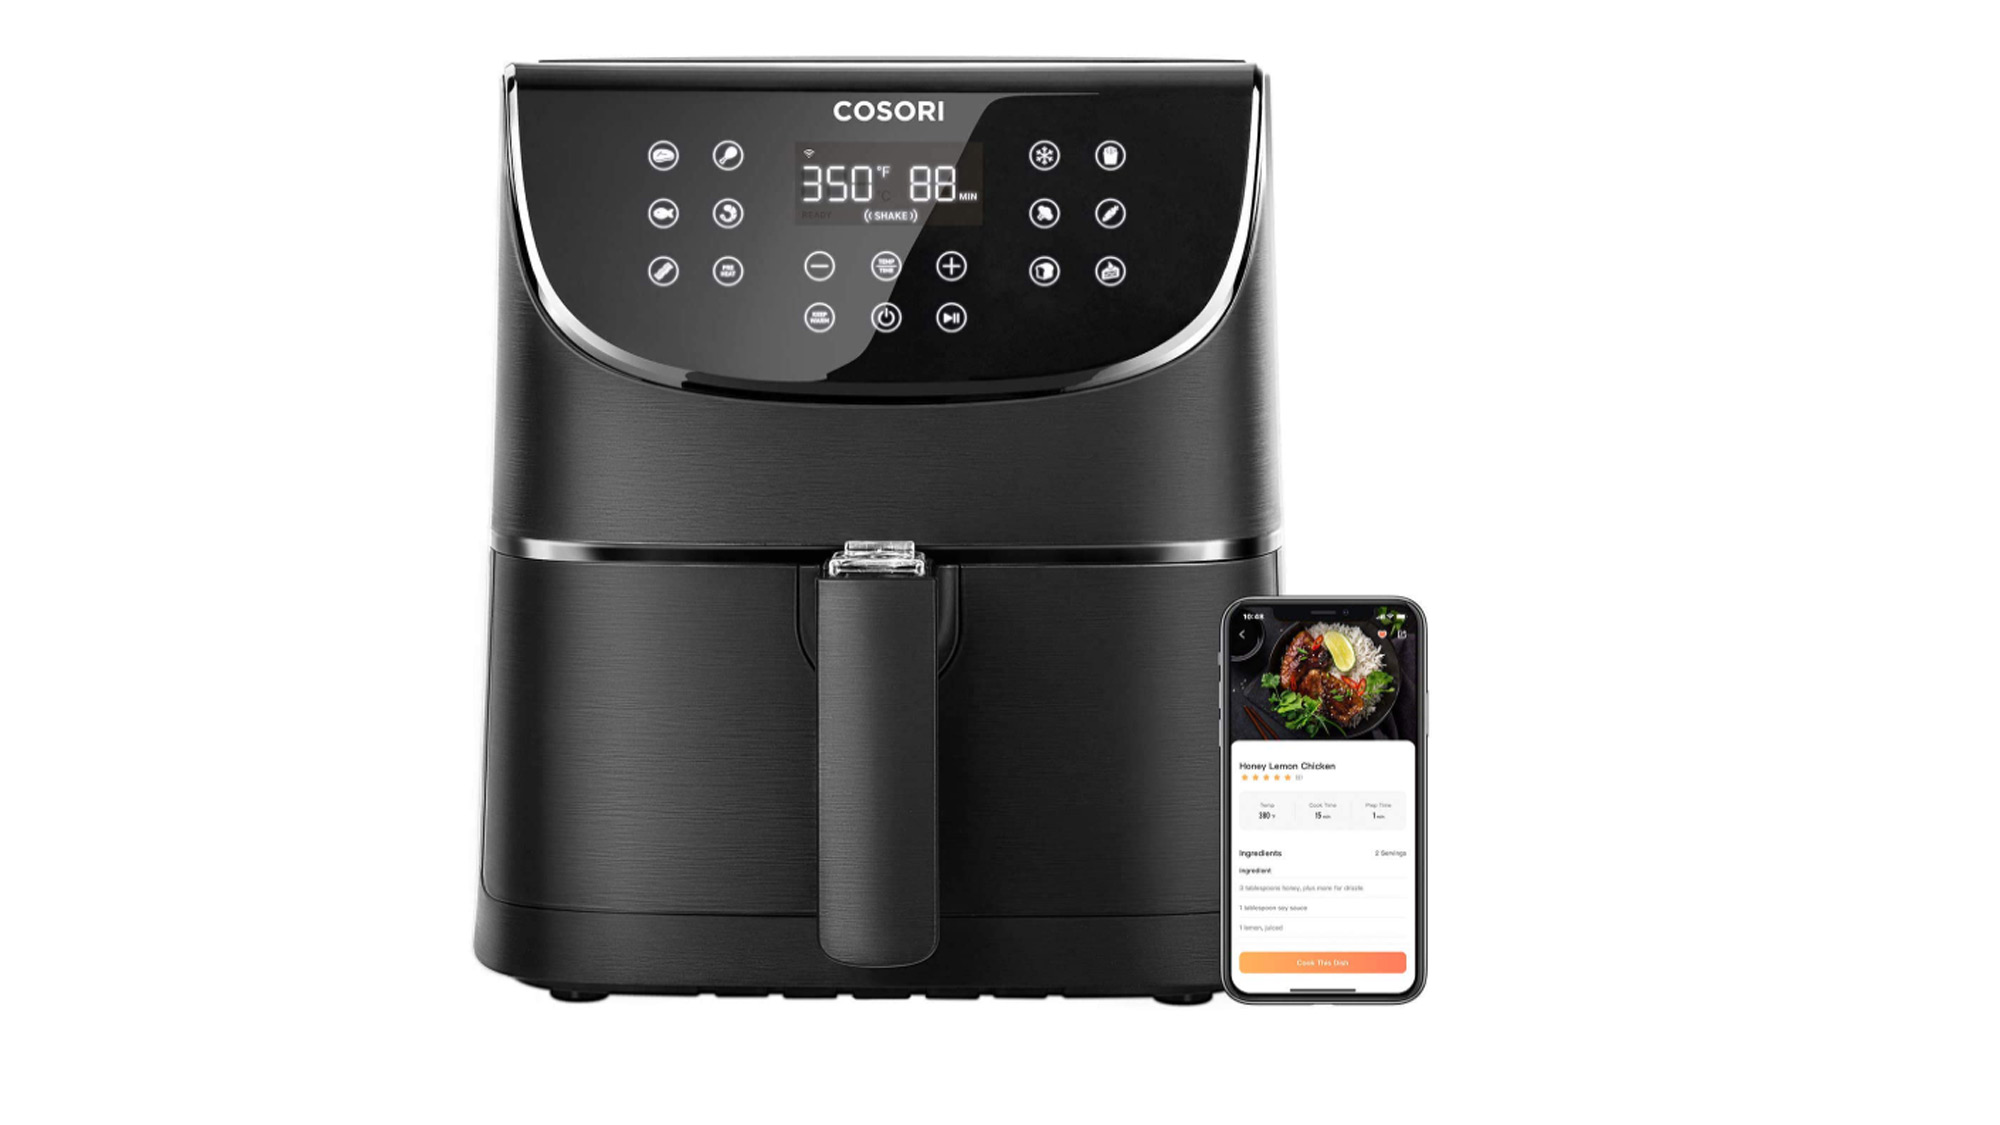 COSORI Smart Wi-Fi Air Fryer - should I buy one?